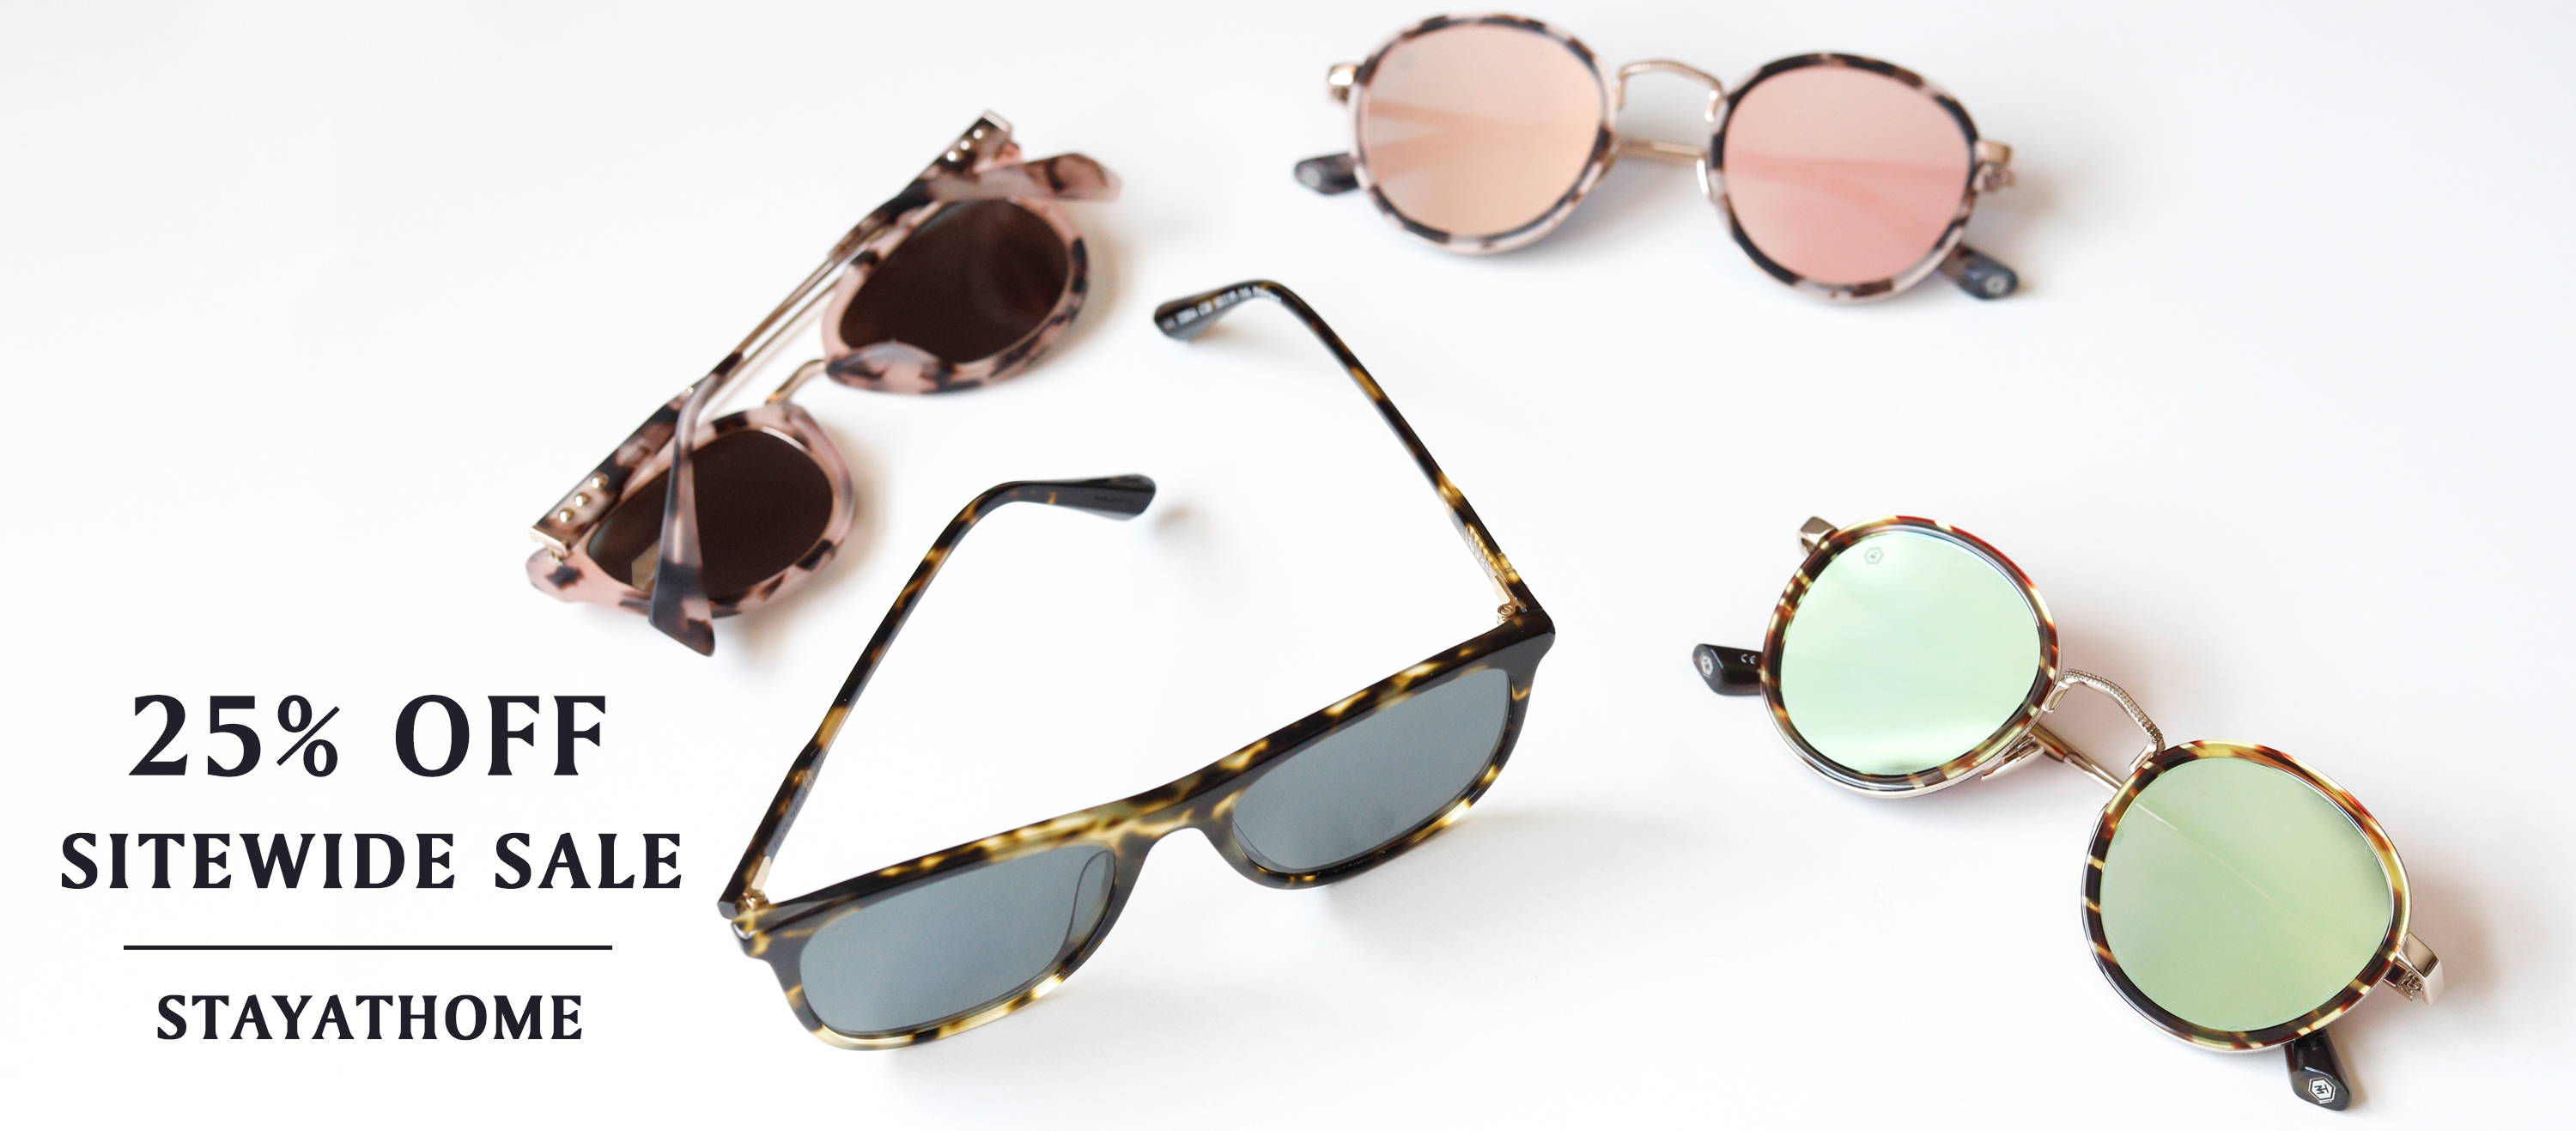 Designer British Sunglasses from Taylor Morris Eyewear